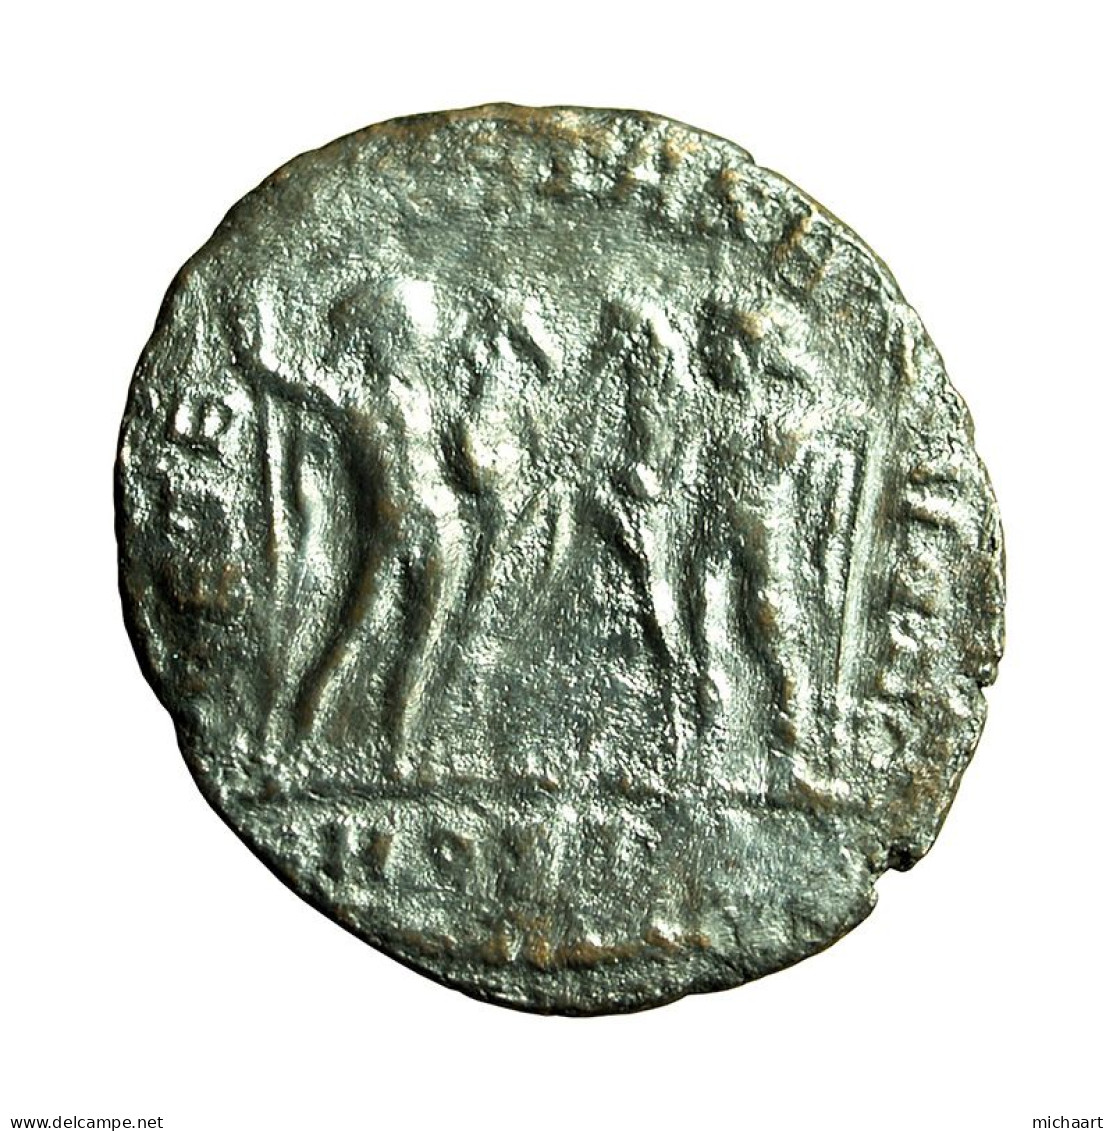 Roman Coin Maxentius Follis Ostia AE23mm Head / Dioscuri 03987 - The Christian Empire (307 AD Tot 363 AD)